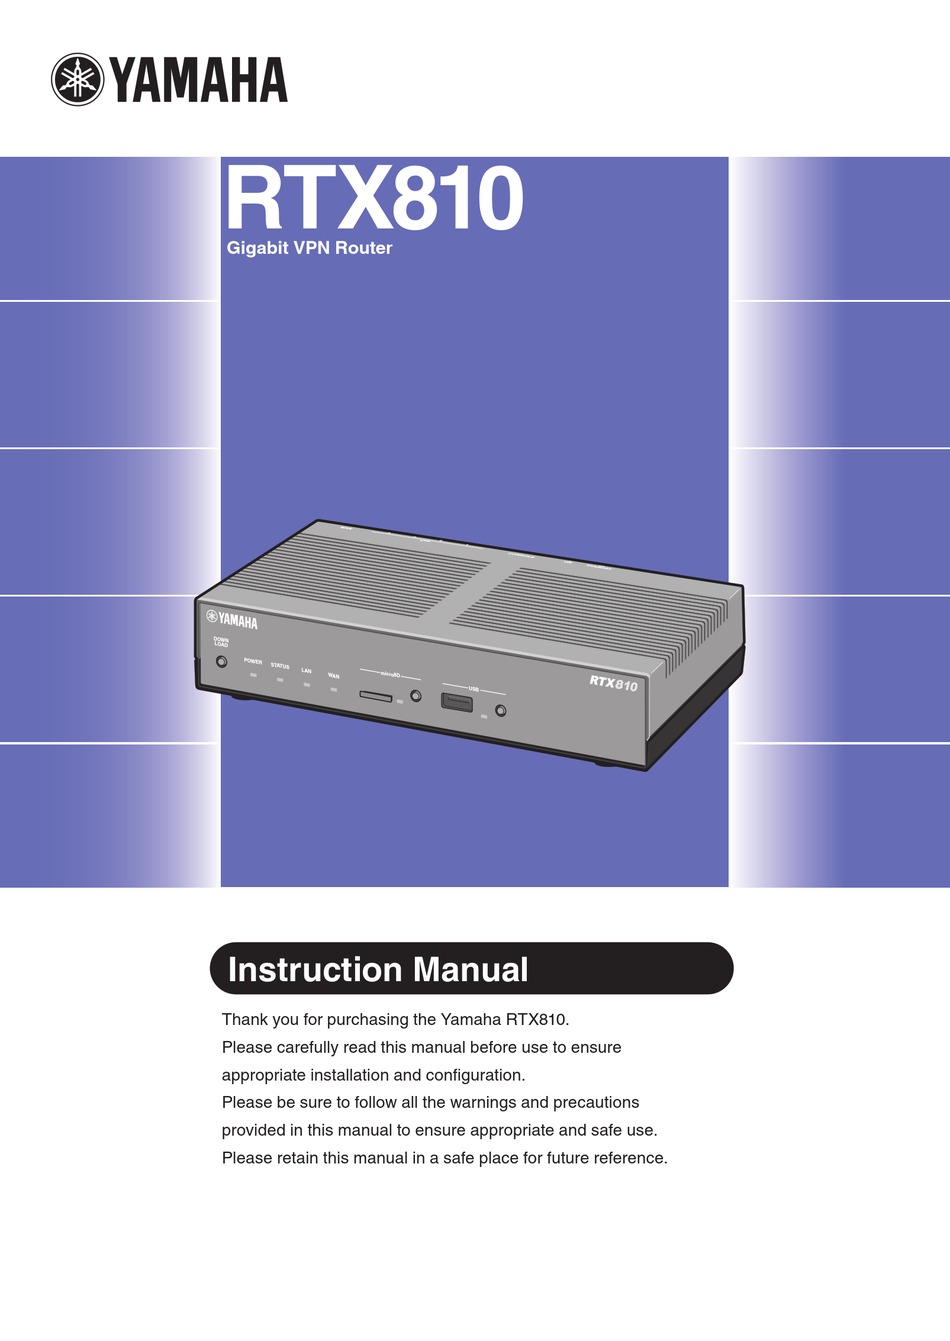 YAMAHA RTX810 INSTRUCTION MANUAL Pdf Download | ManualsLib